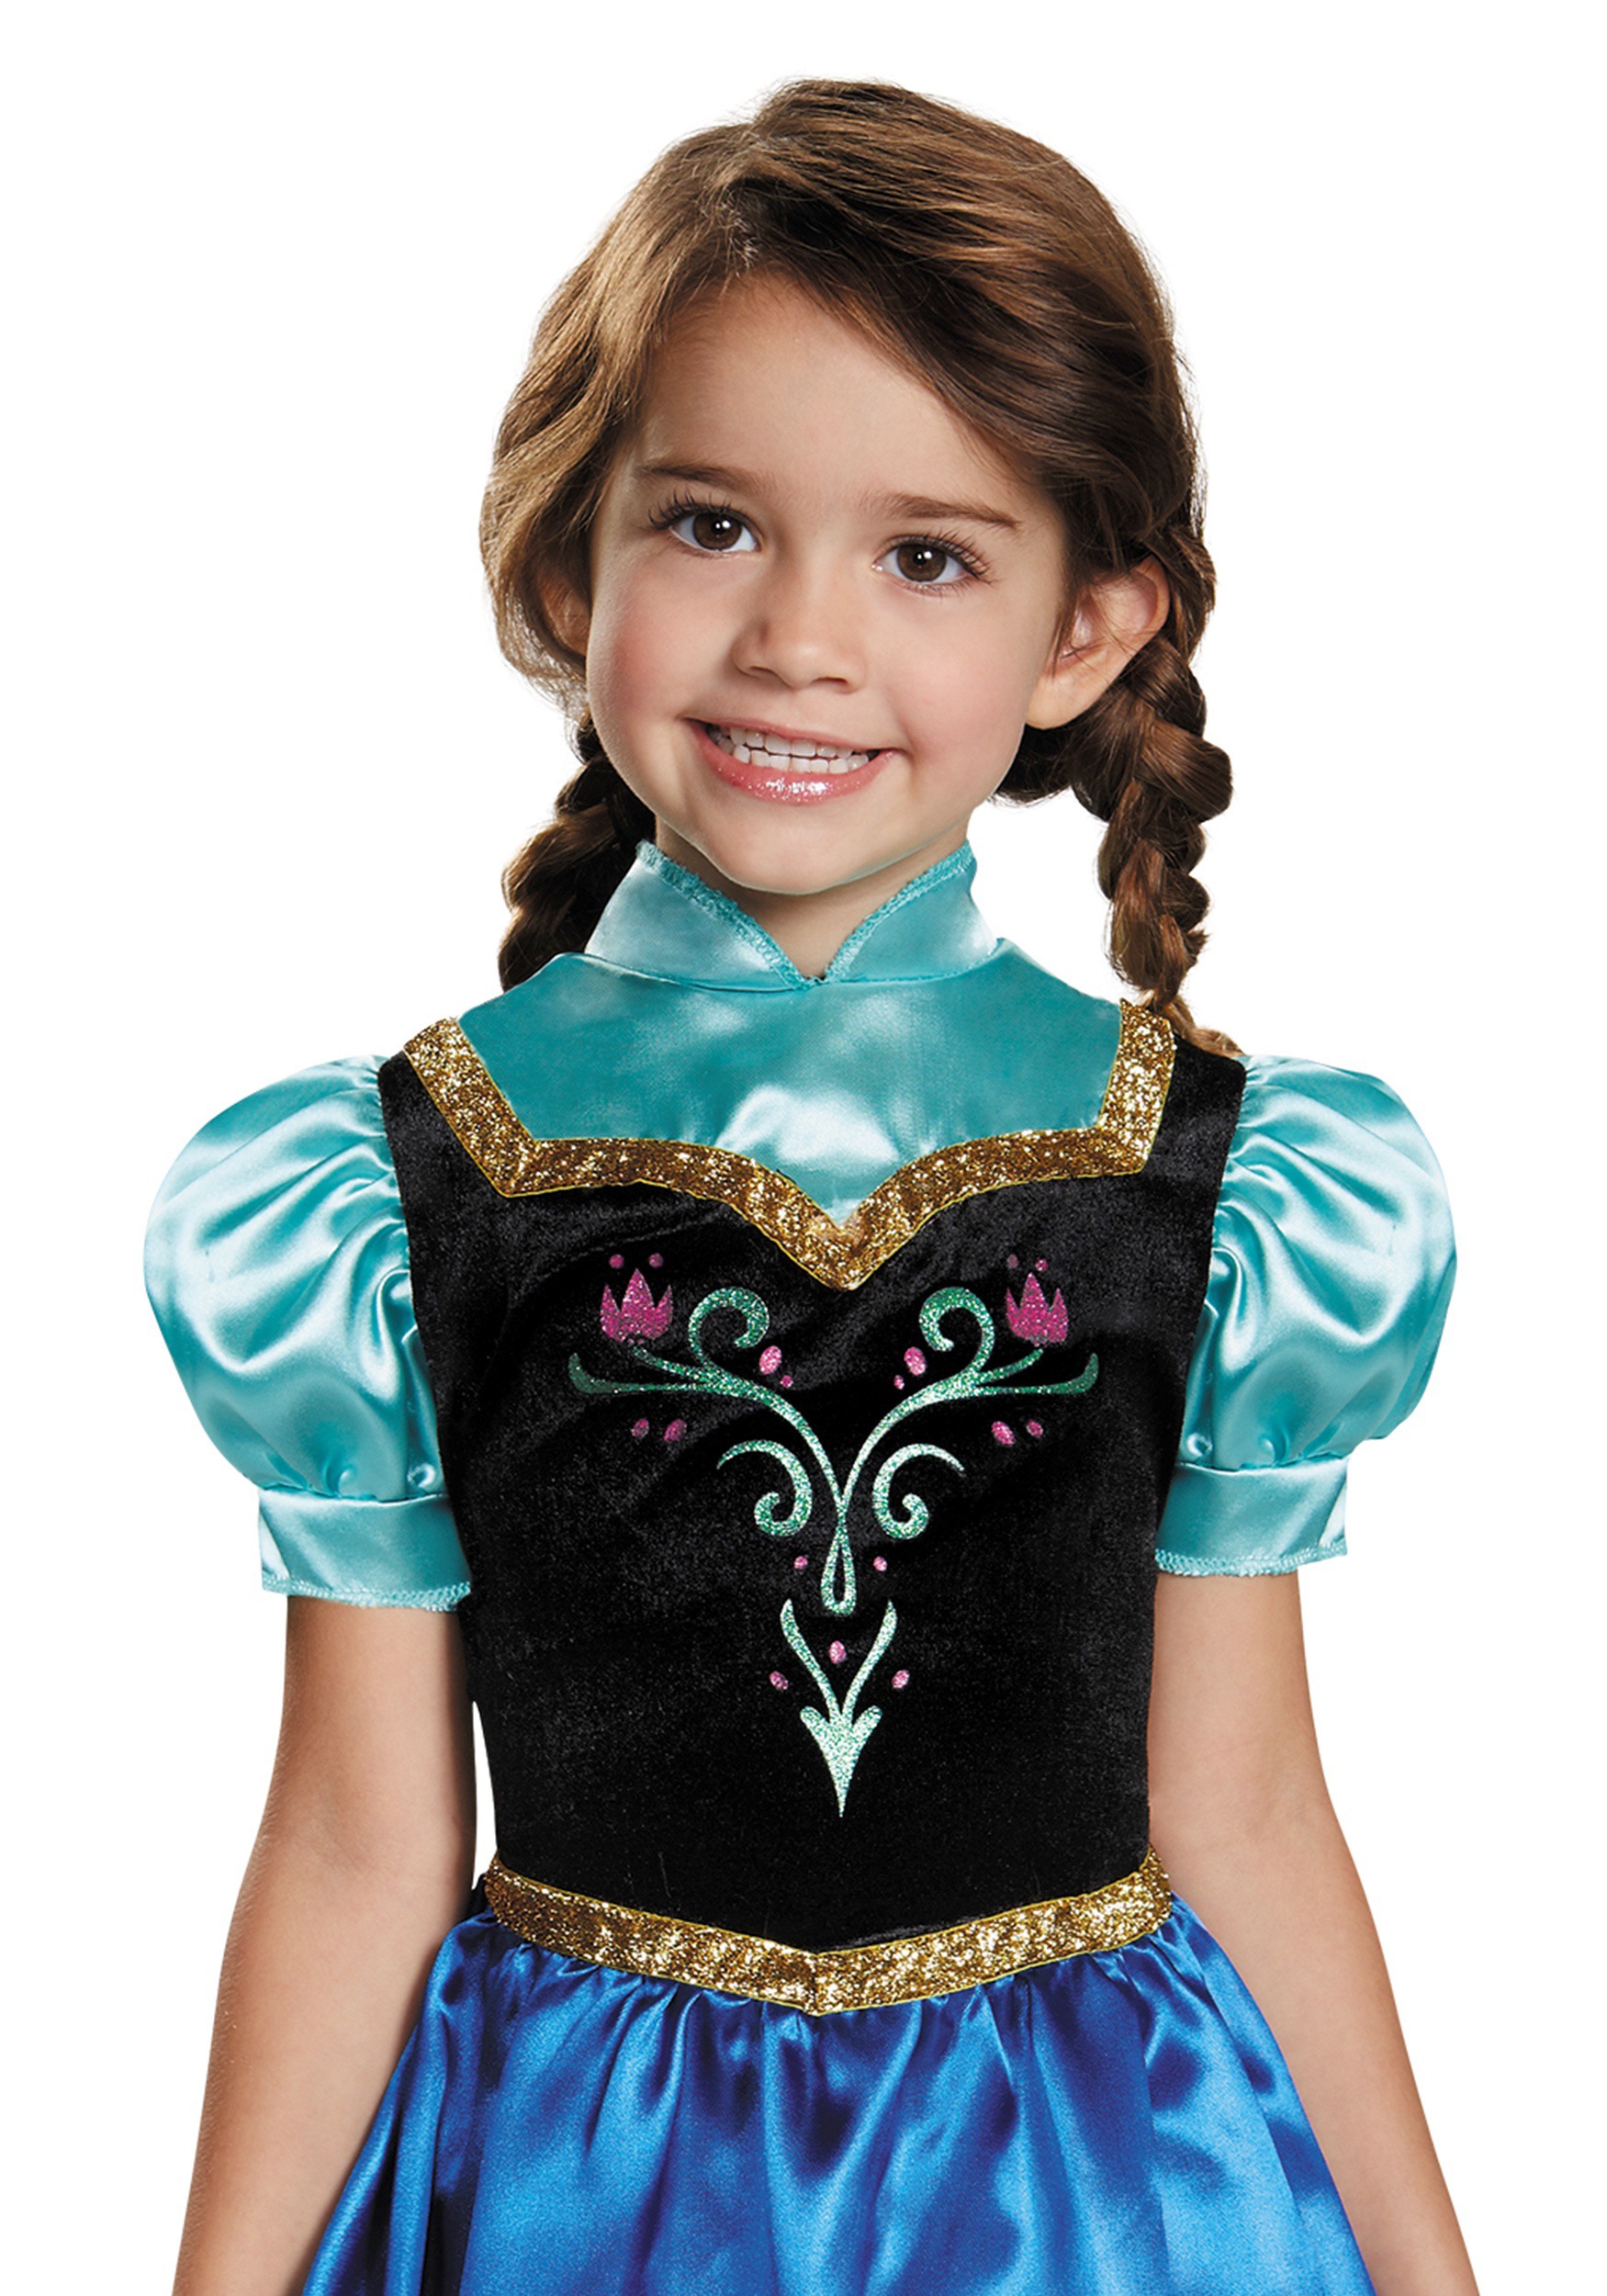 Anna Costume for Kids – Frozen